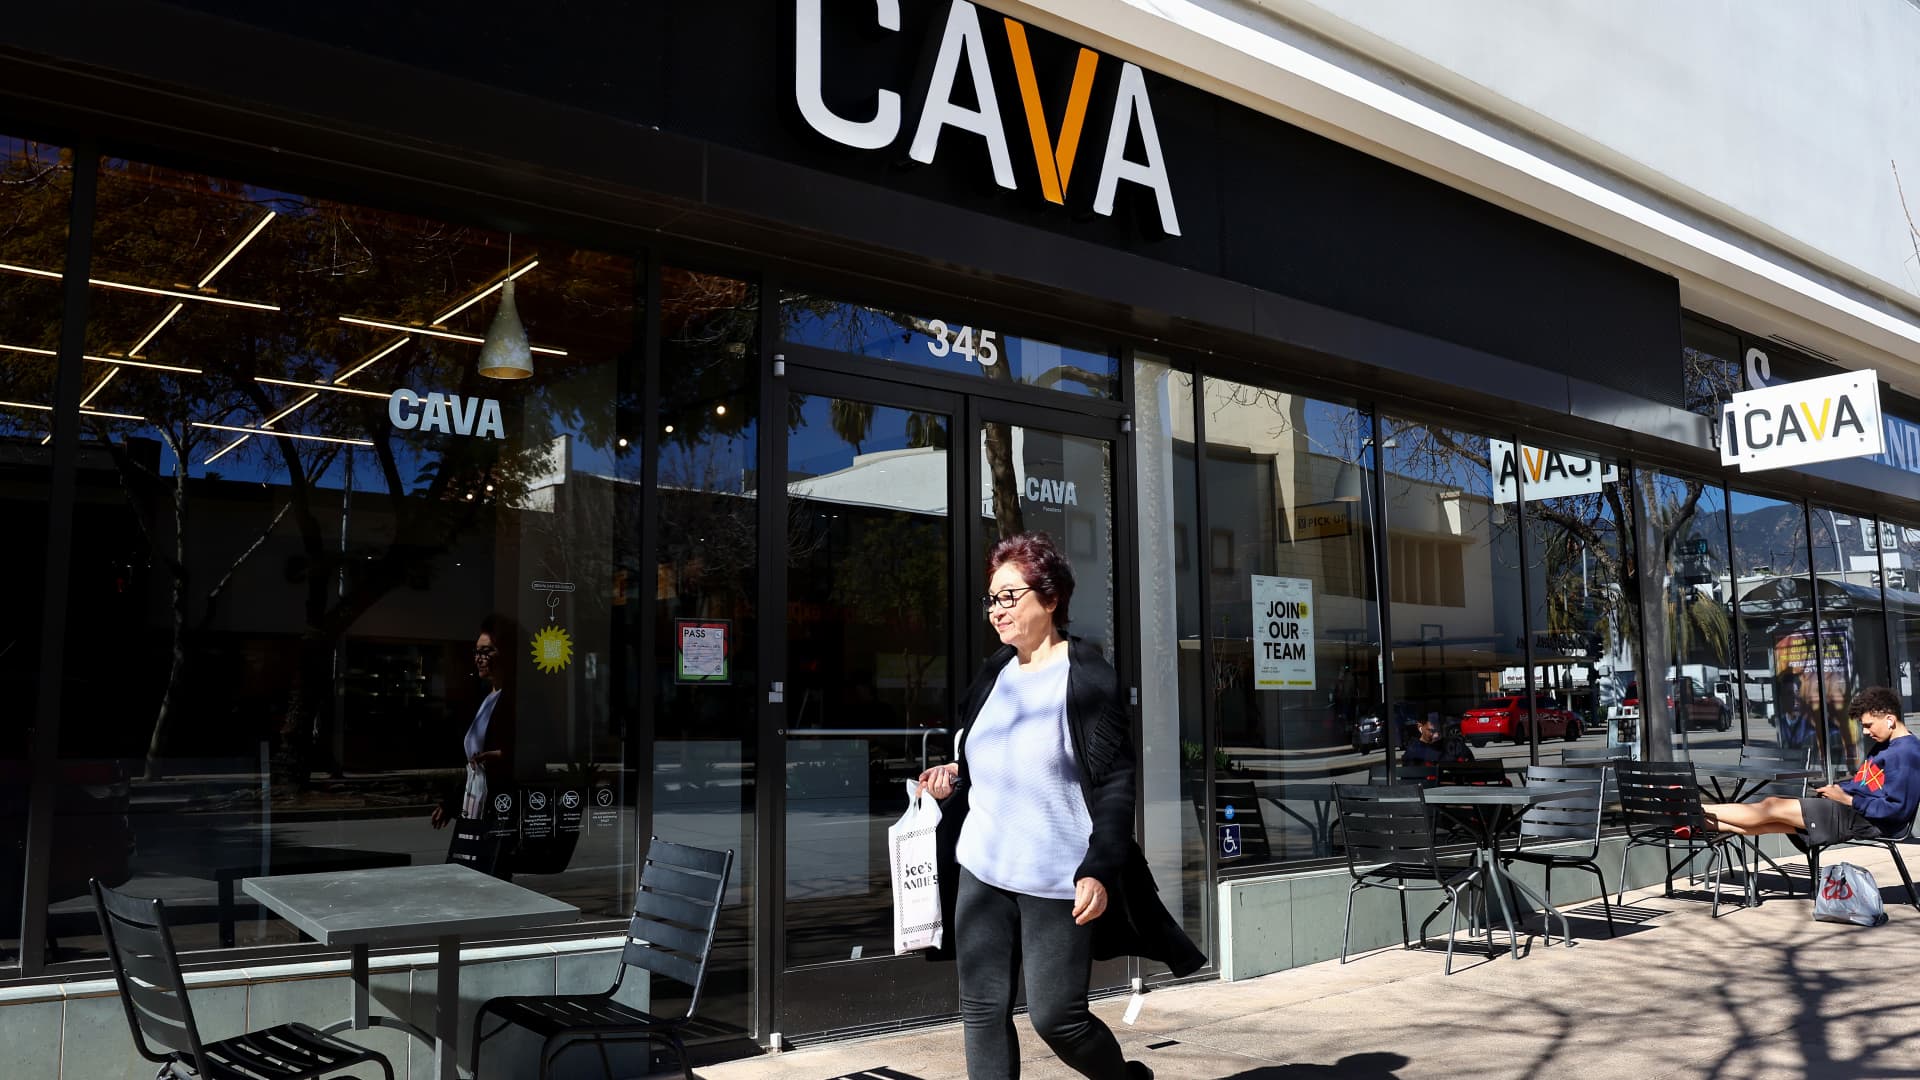 Restaurant chain Cava aims for $2.12 billion valuation in U.S. IPO